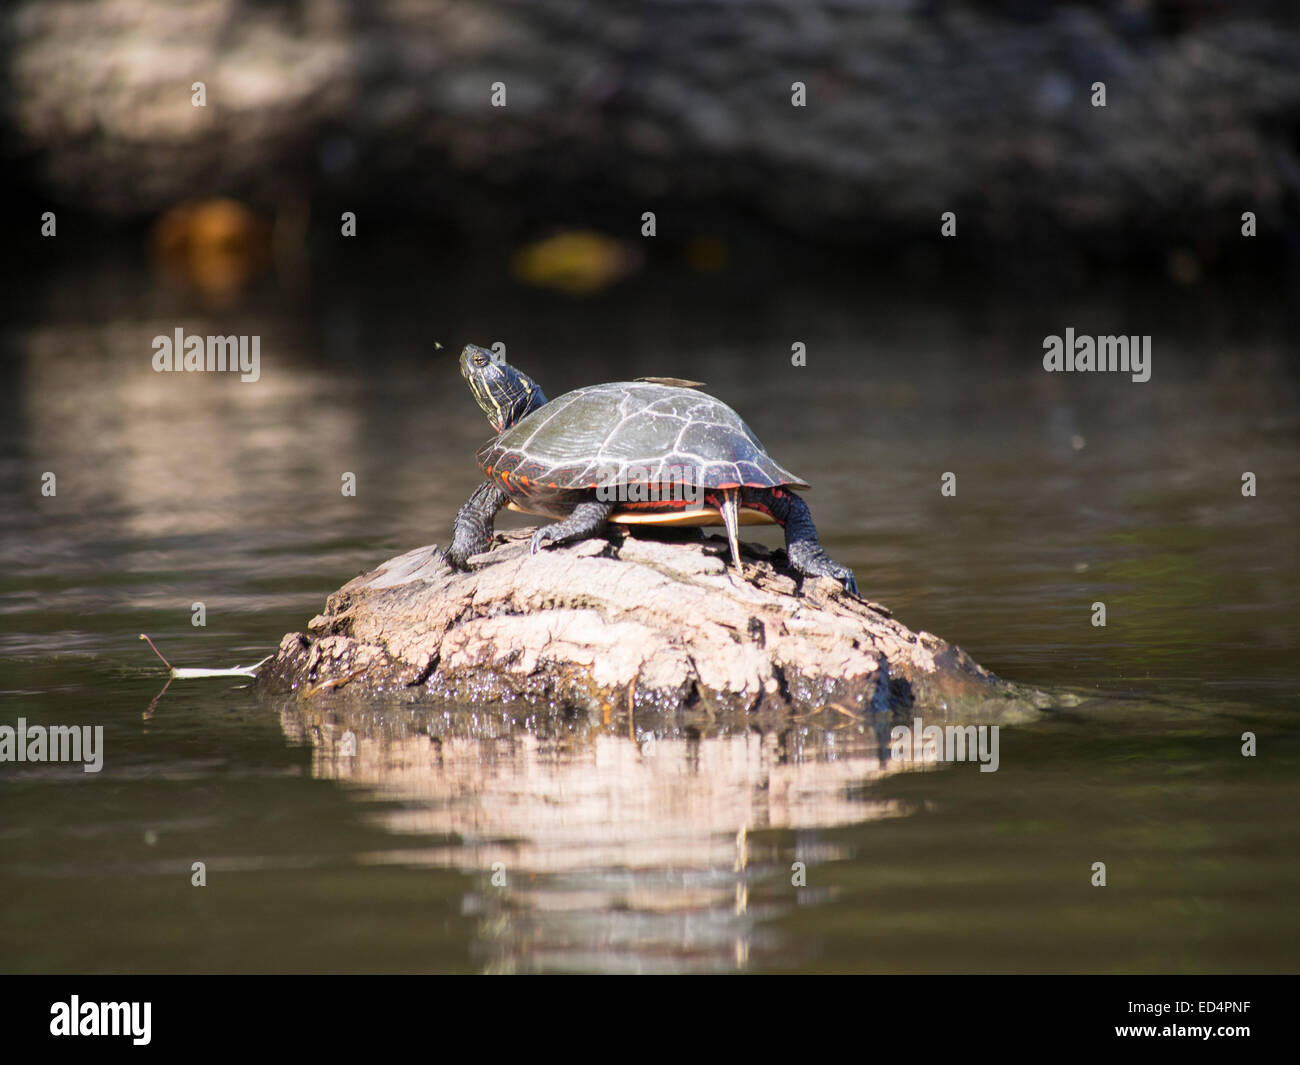 Turtle sun bathing on a rock Stock Photo